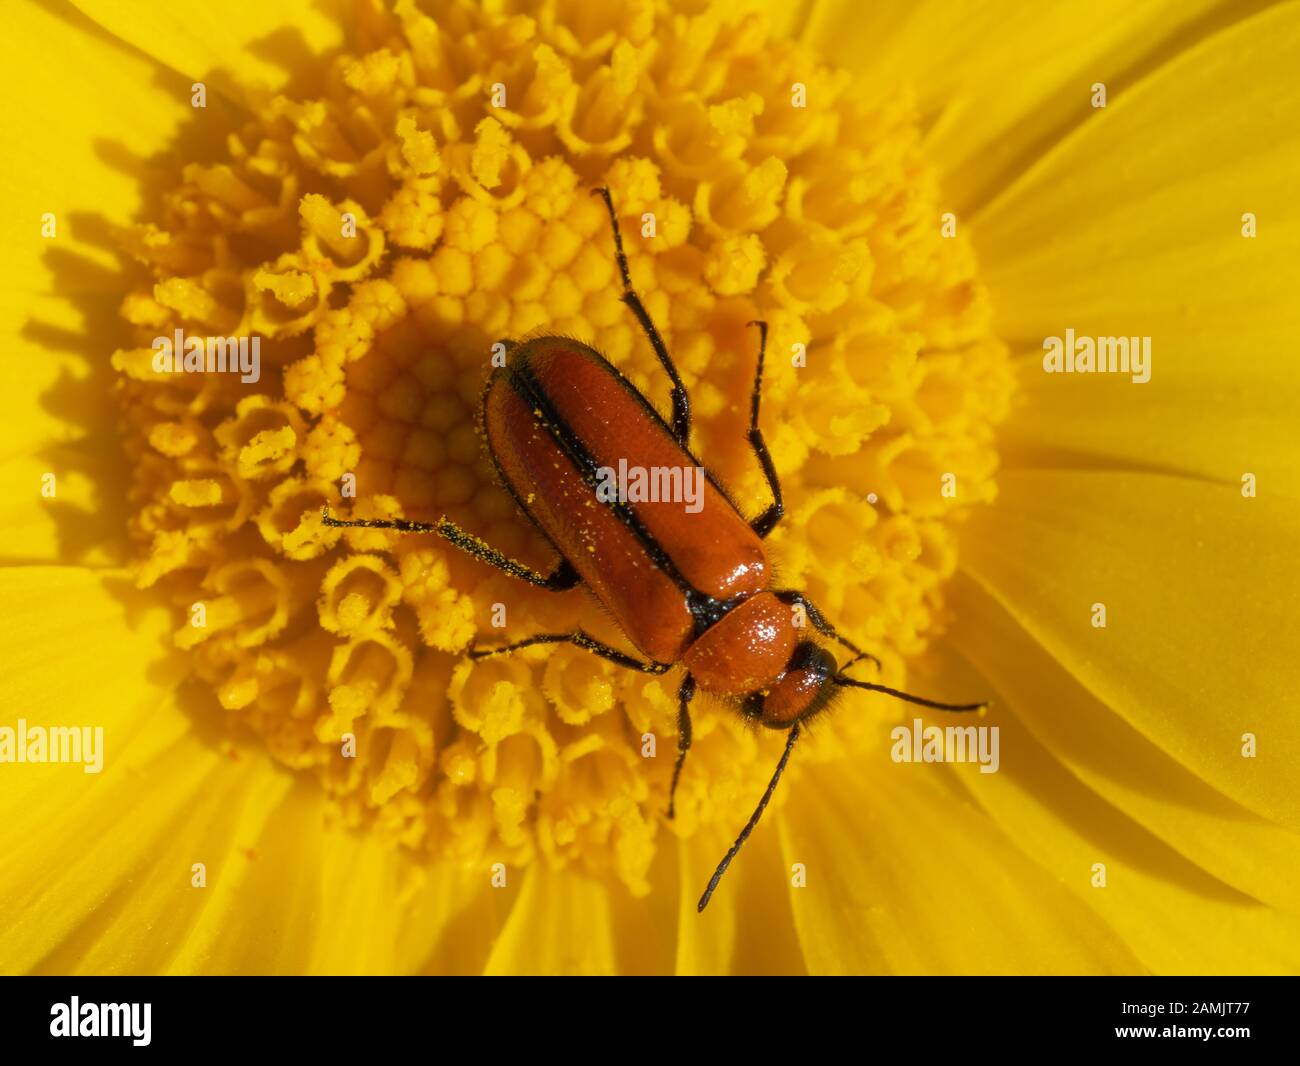 Orange beetle on a bright yellow desert marigold flower Stock Photo